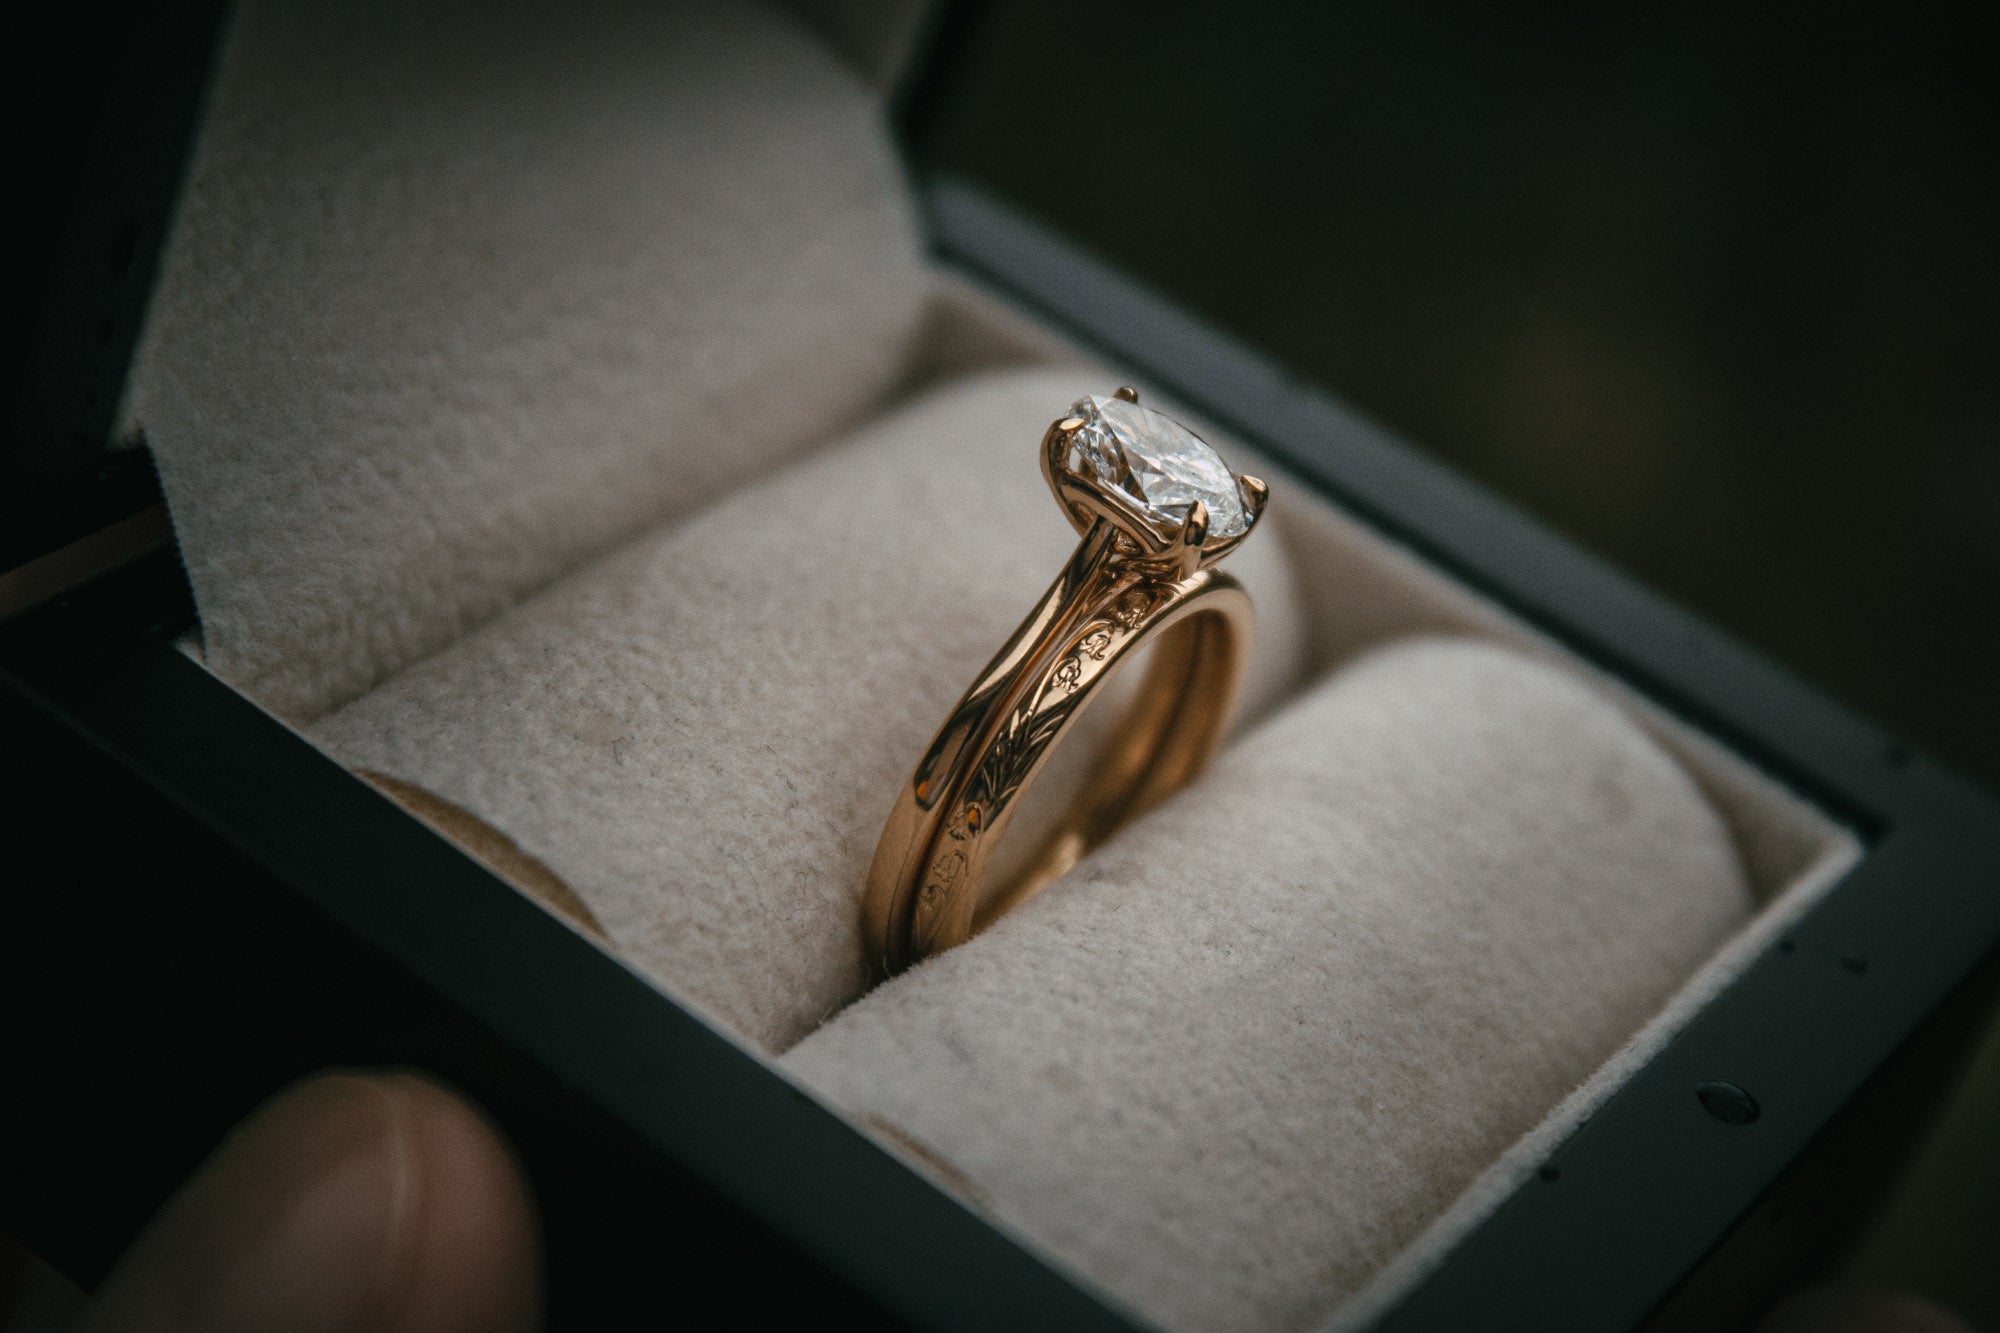 Oval diamond with engraved wedding band